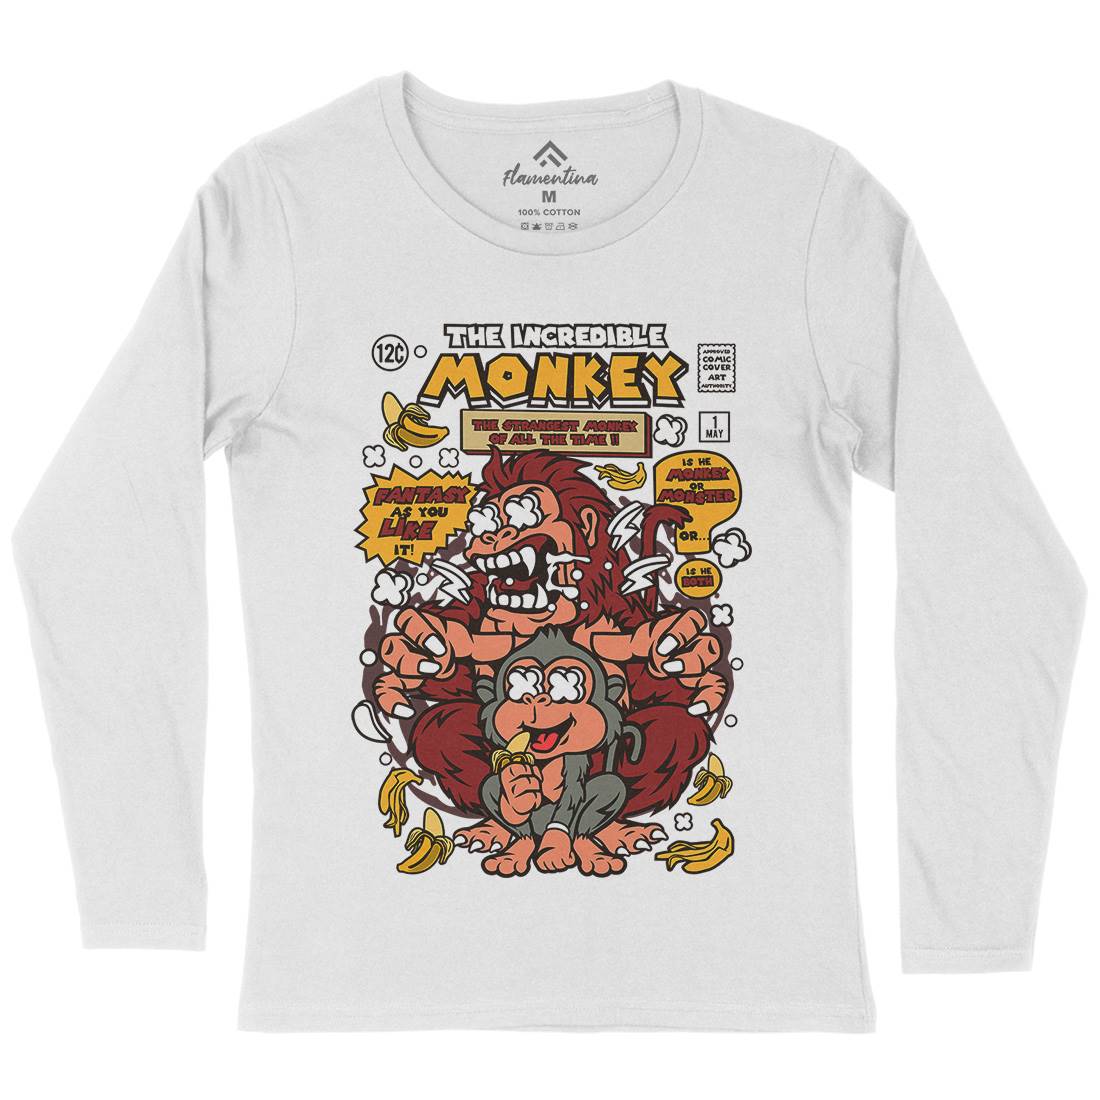 Incredible Monkey Womens Long Sleeve T-Shirt Animals C570